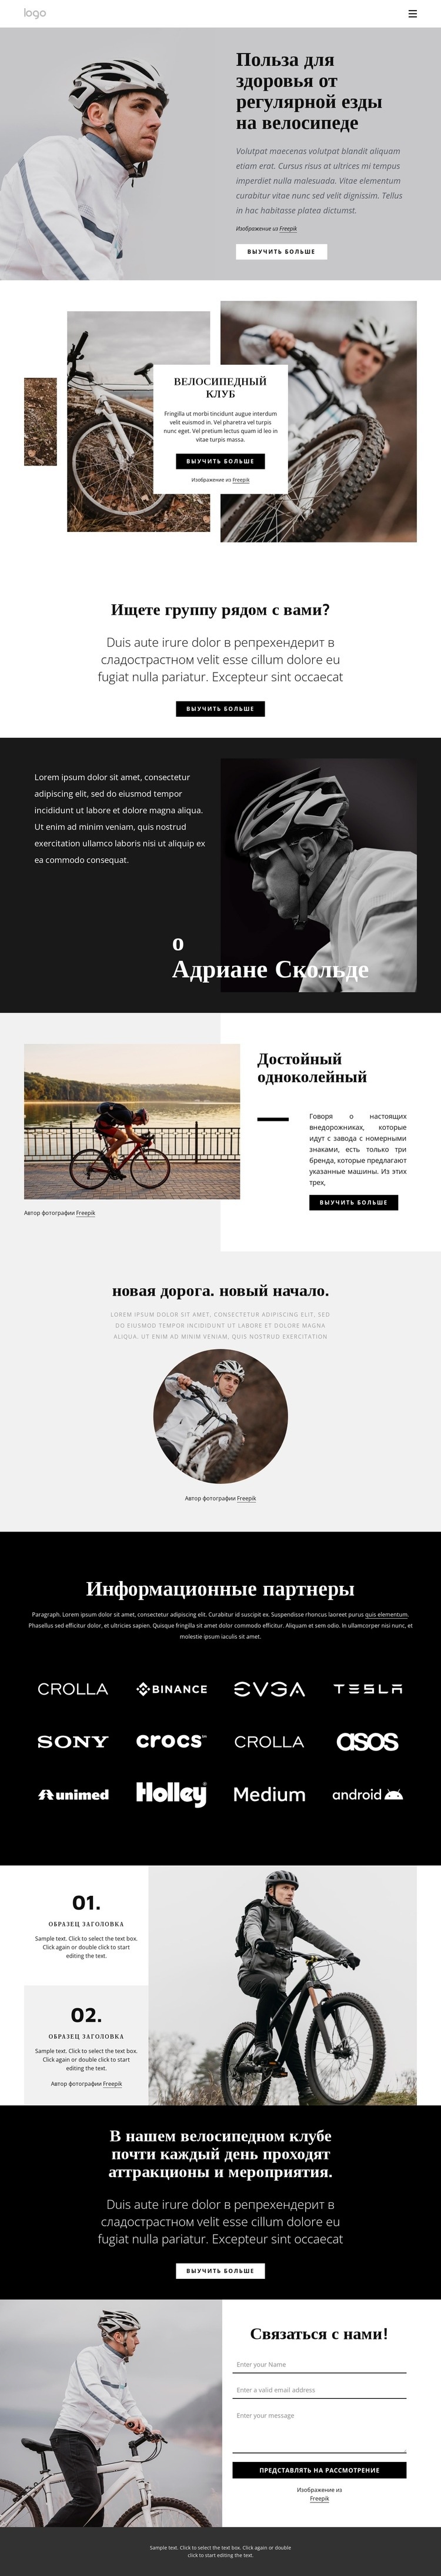 Преимущества регулярной езды на велосипеде HTML5 шаблон